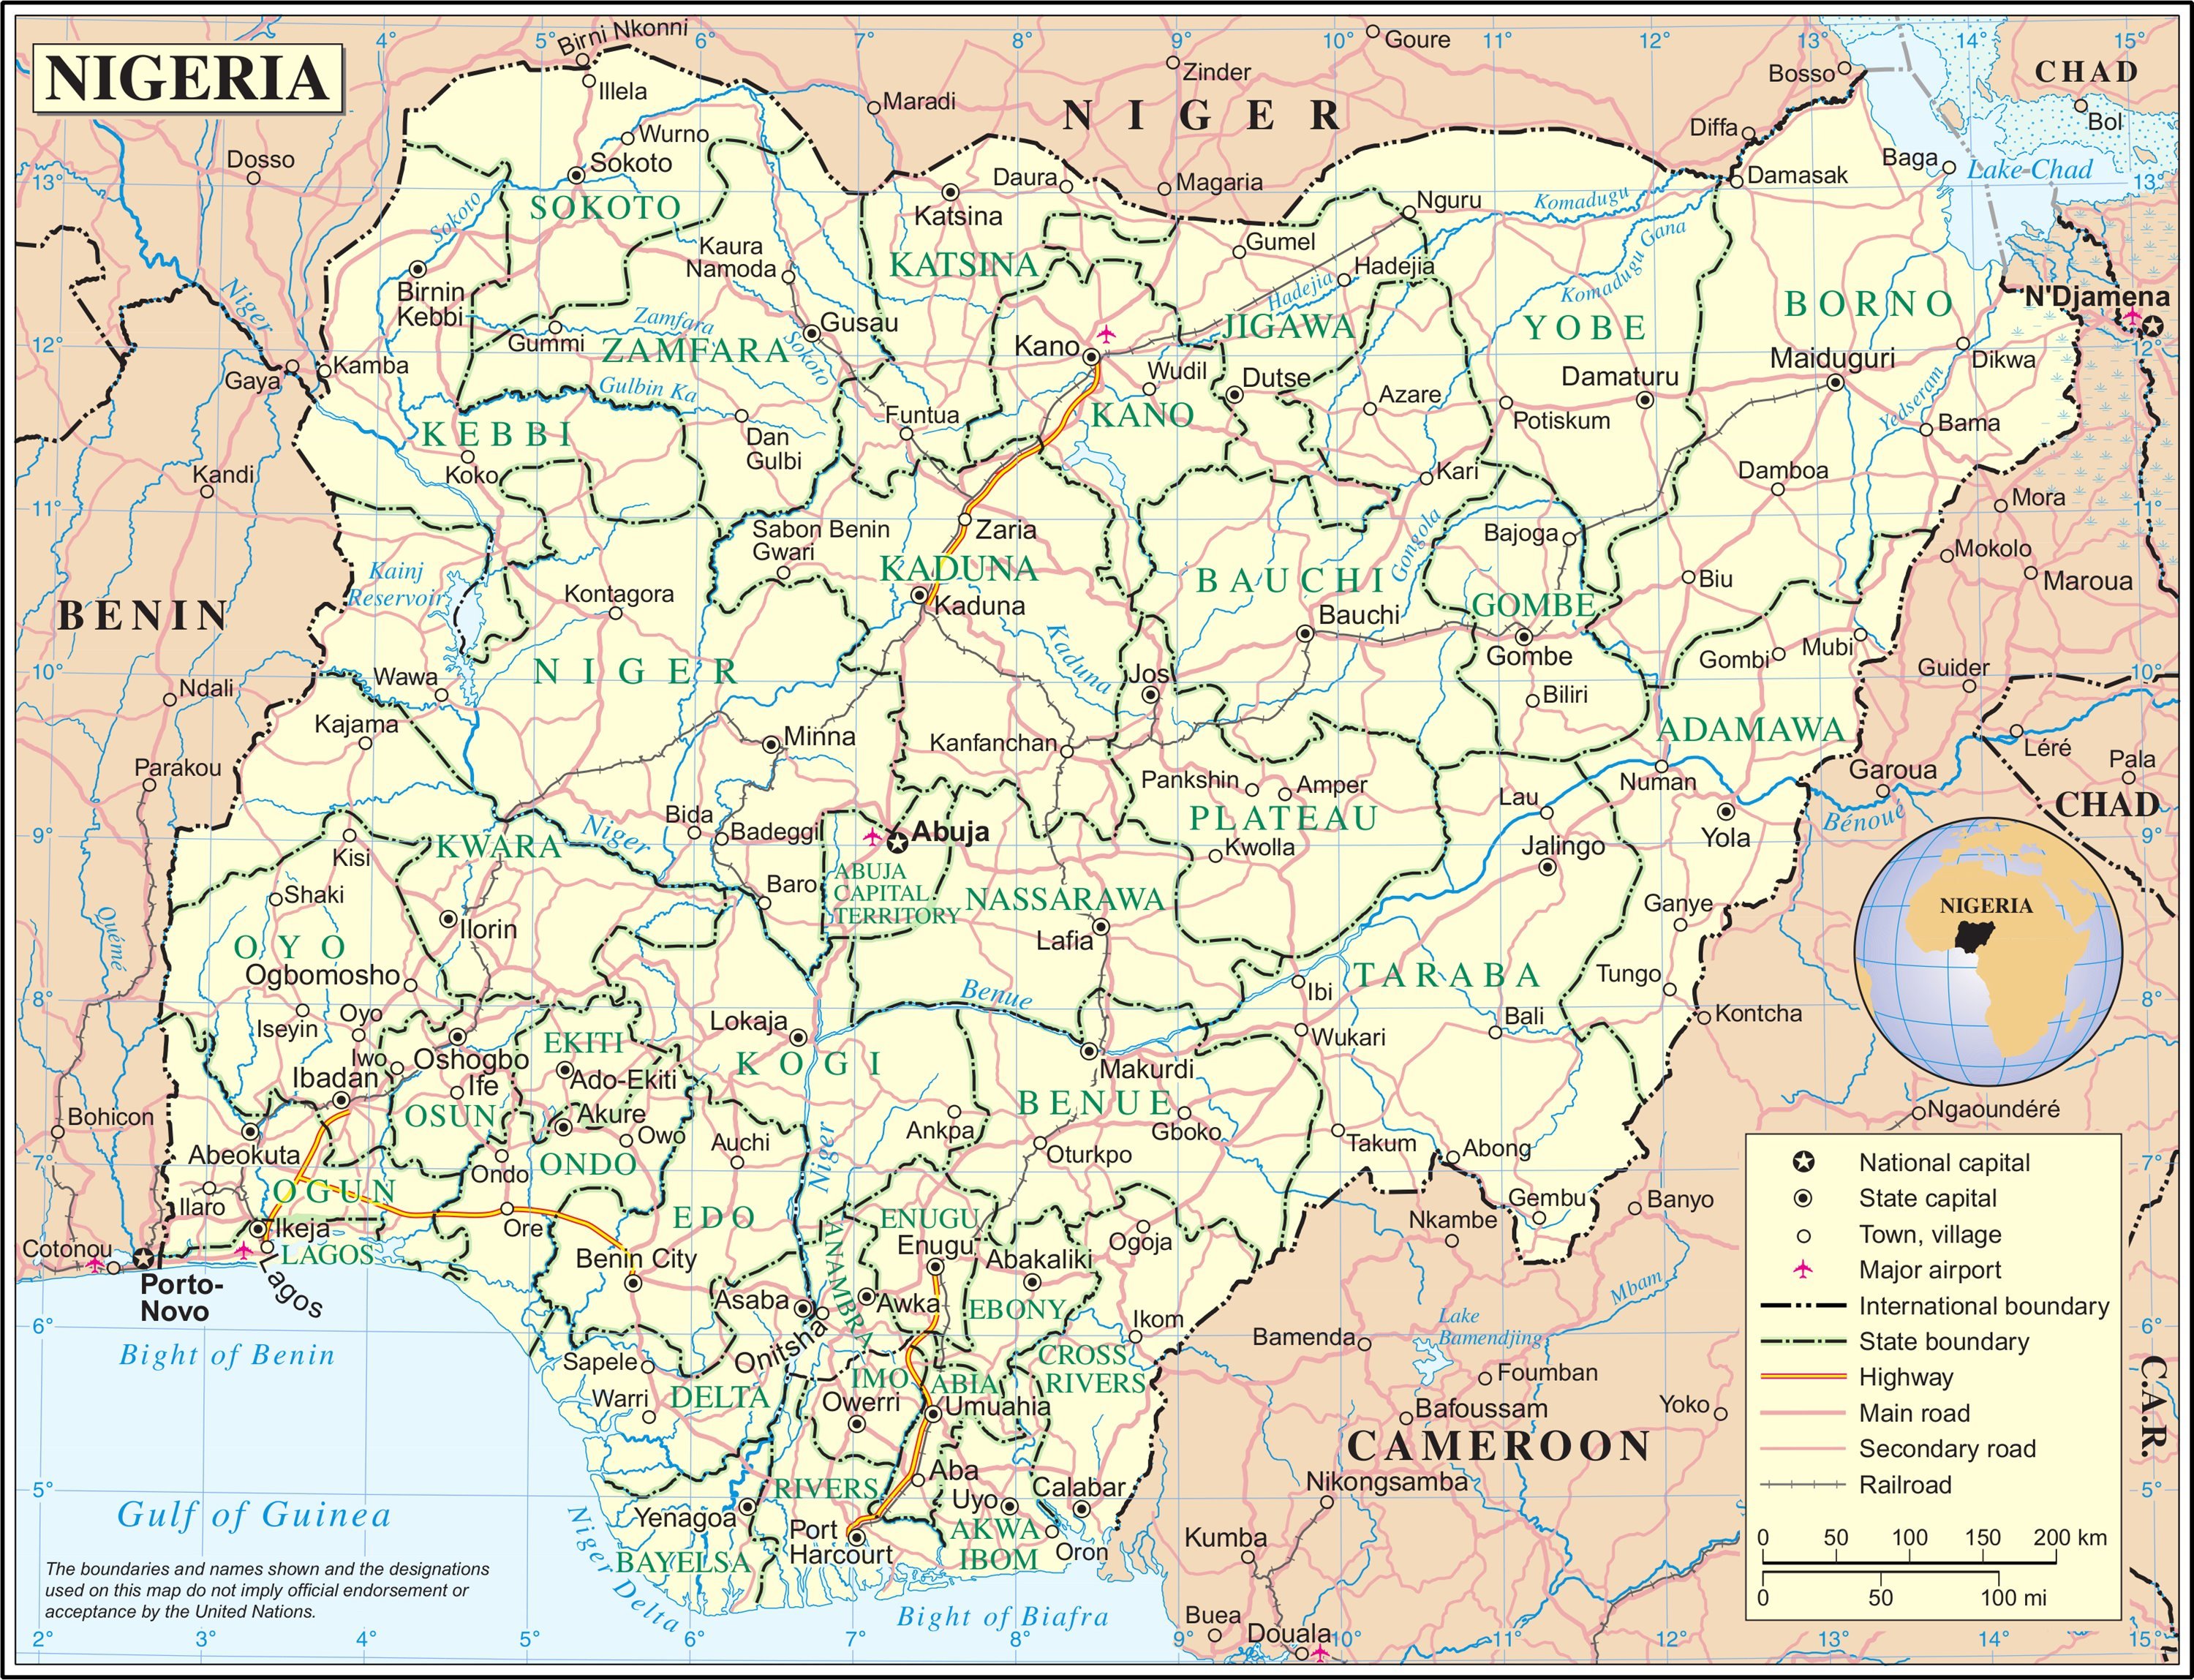 Nigeria gps maps free download - polrenor